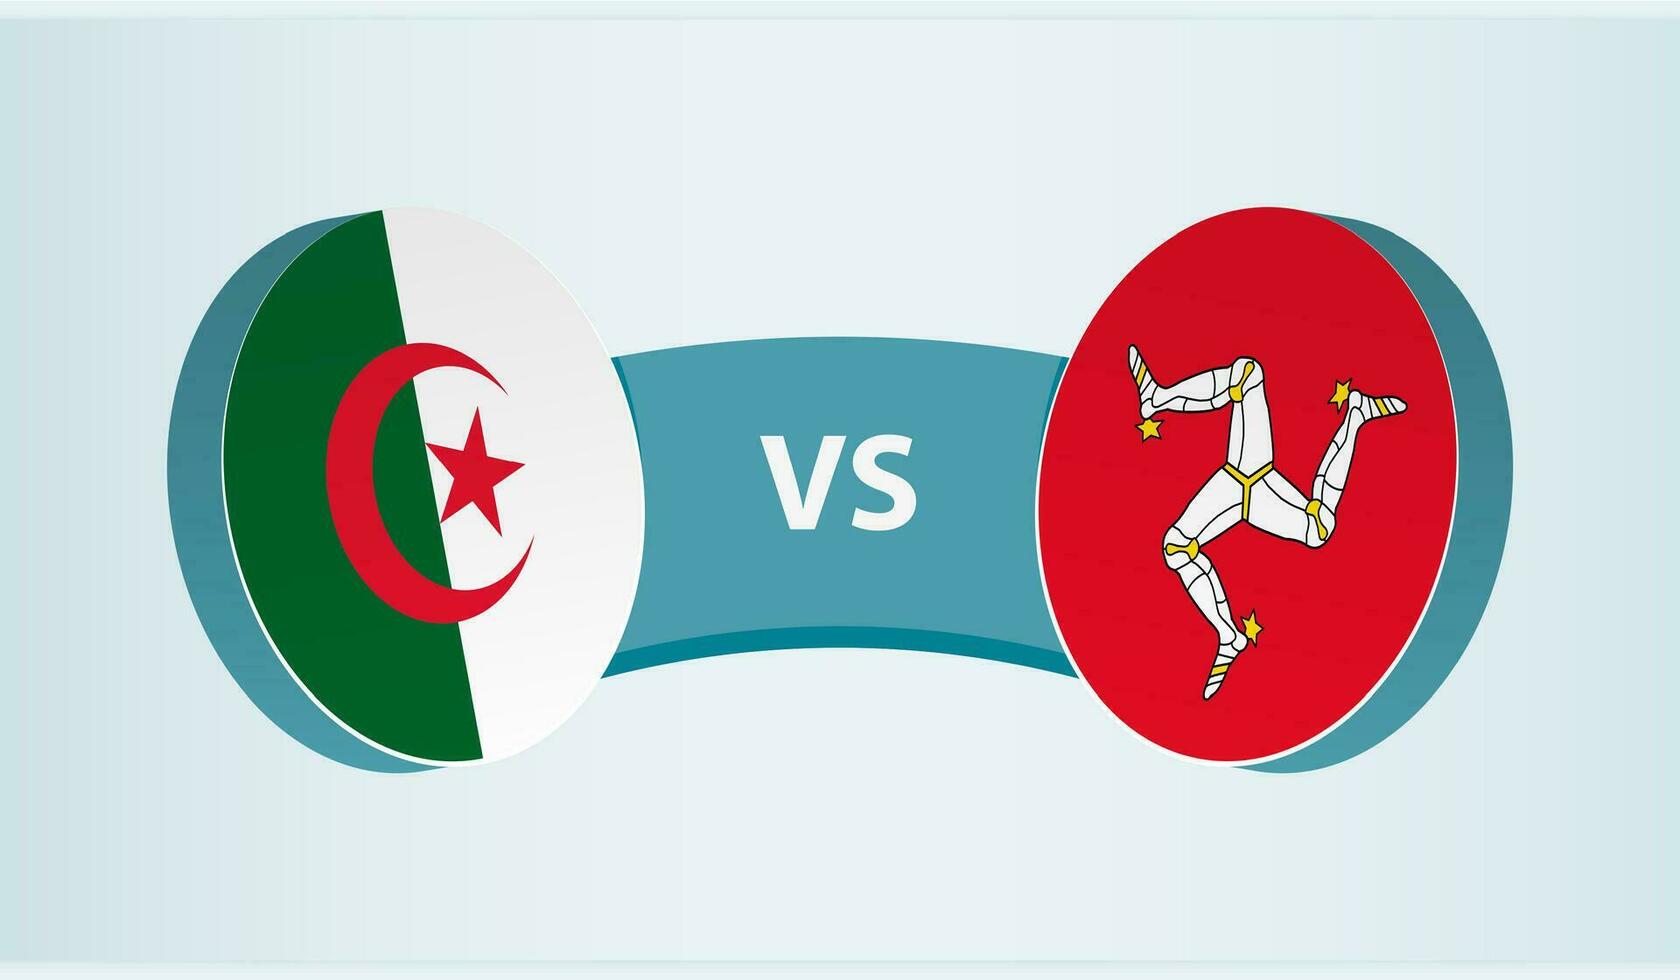 Algeria versus Isle of Man, team sports competition concept. vector